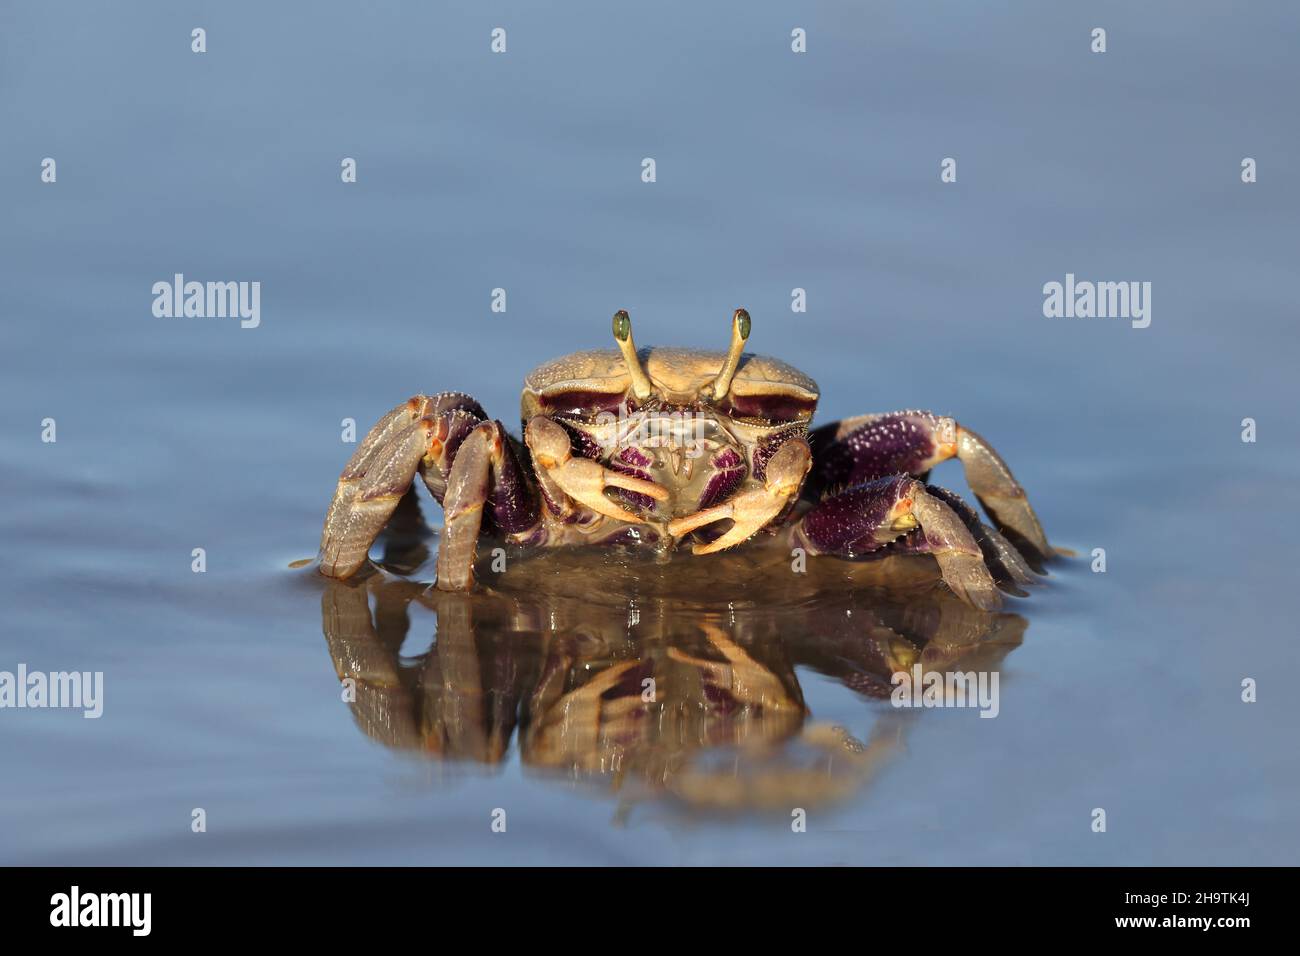 Crabe fiddler marocain, crabe fiddler européen (Uca tangeri), femme assise en eau peu profonde, vue de face, Espagne, Andalousie, Sanlucar de Barrameda Banque D'Images